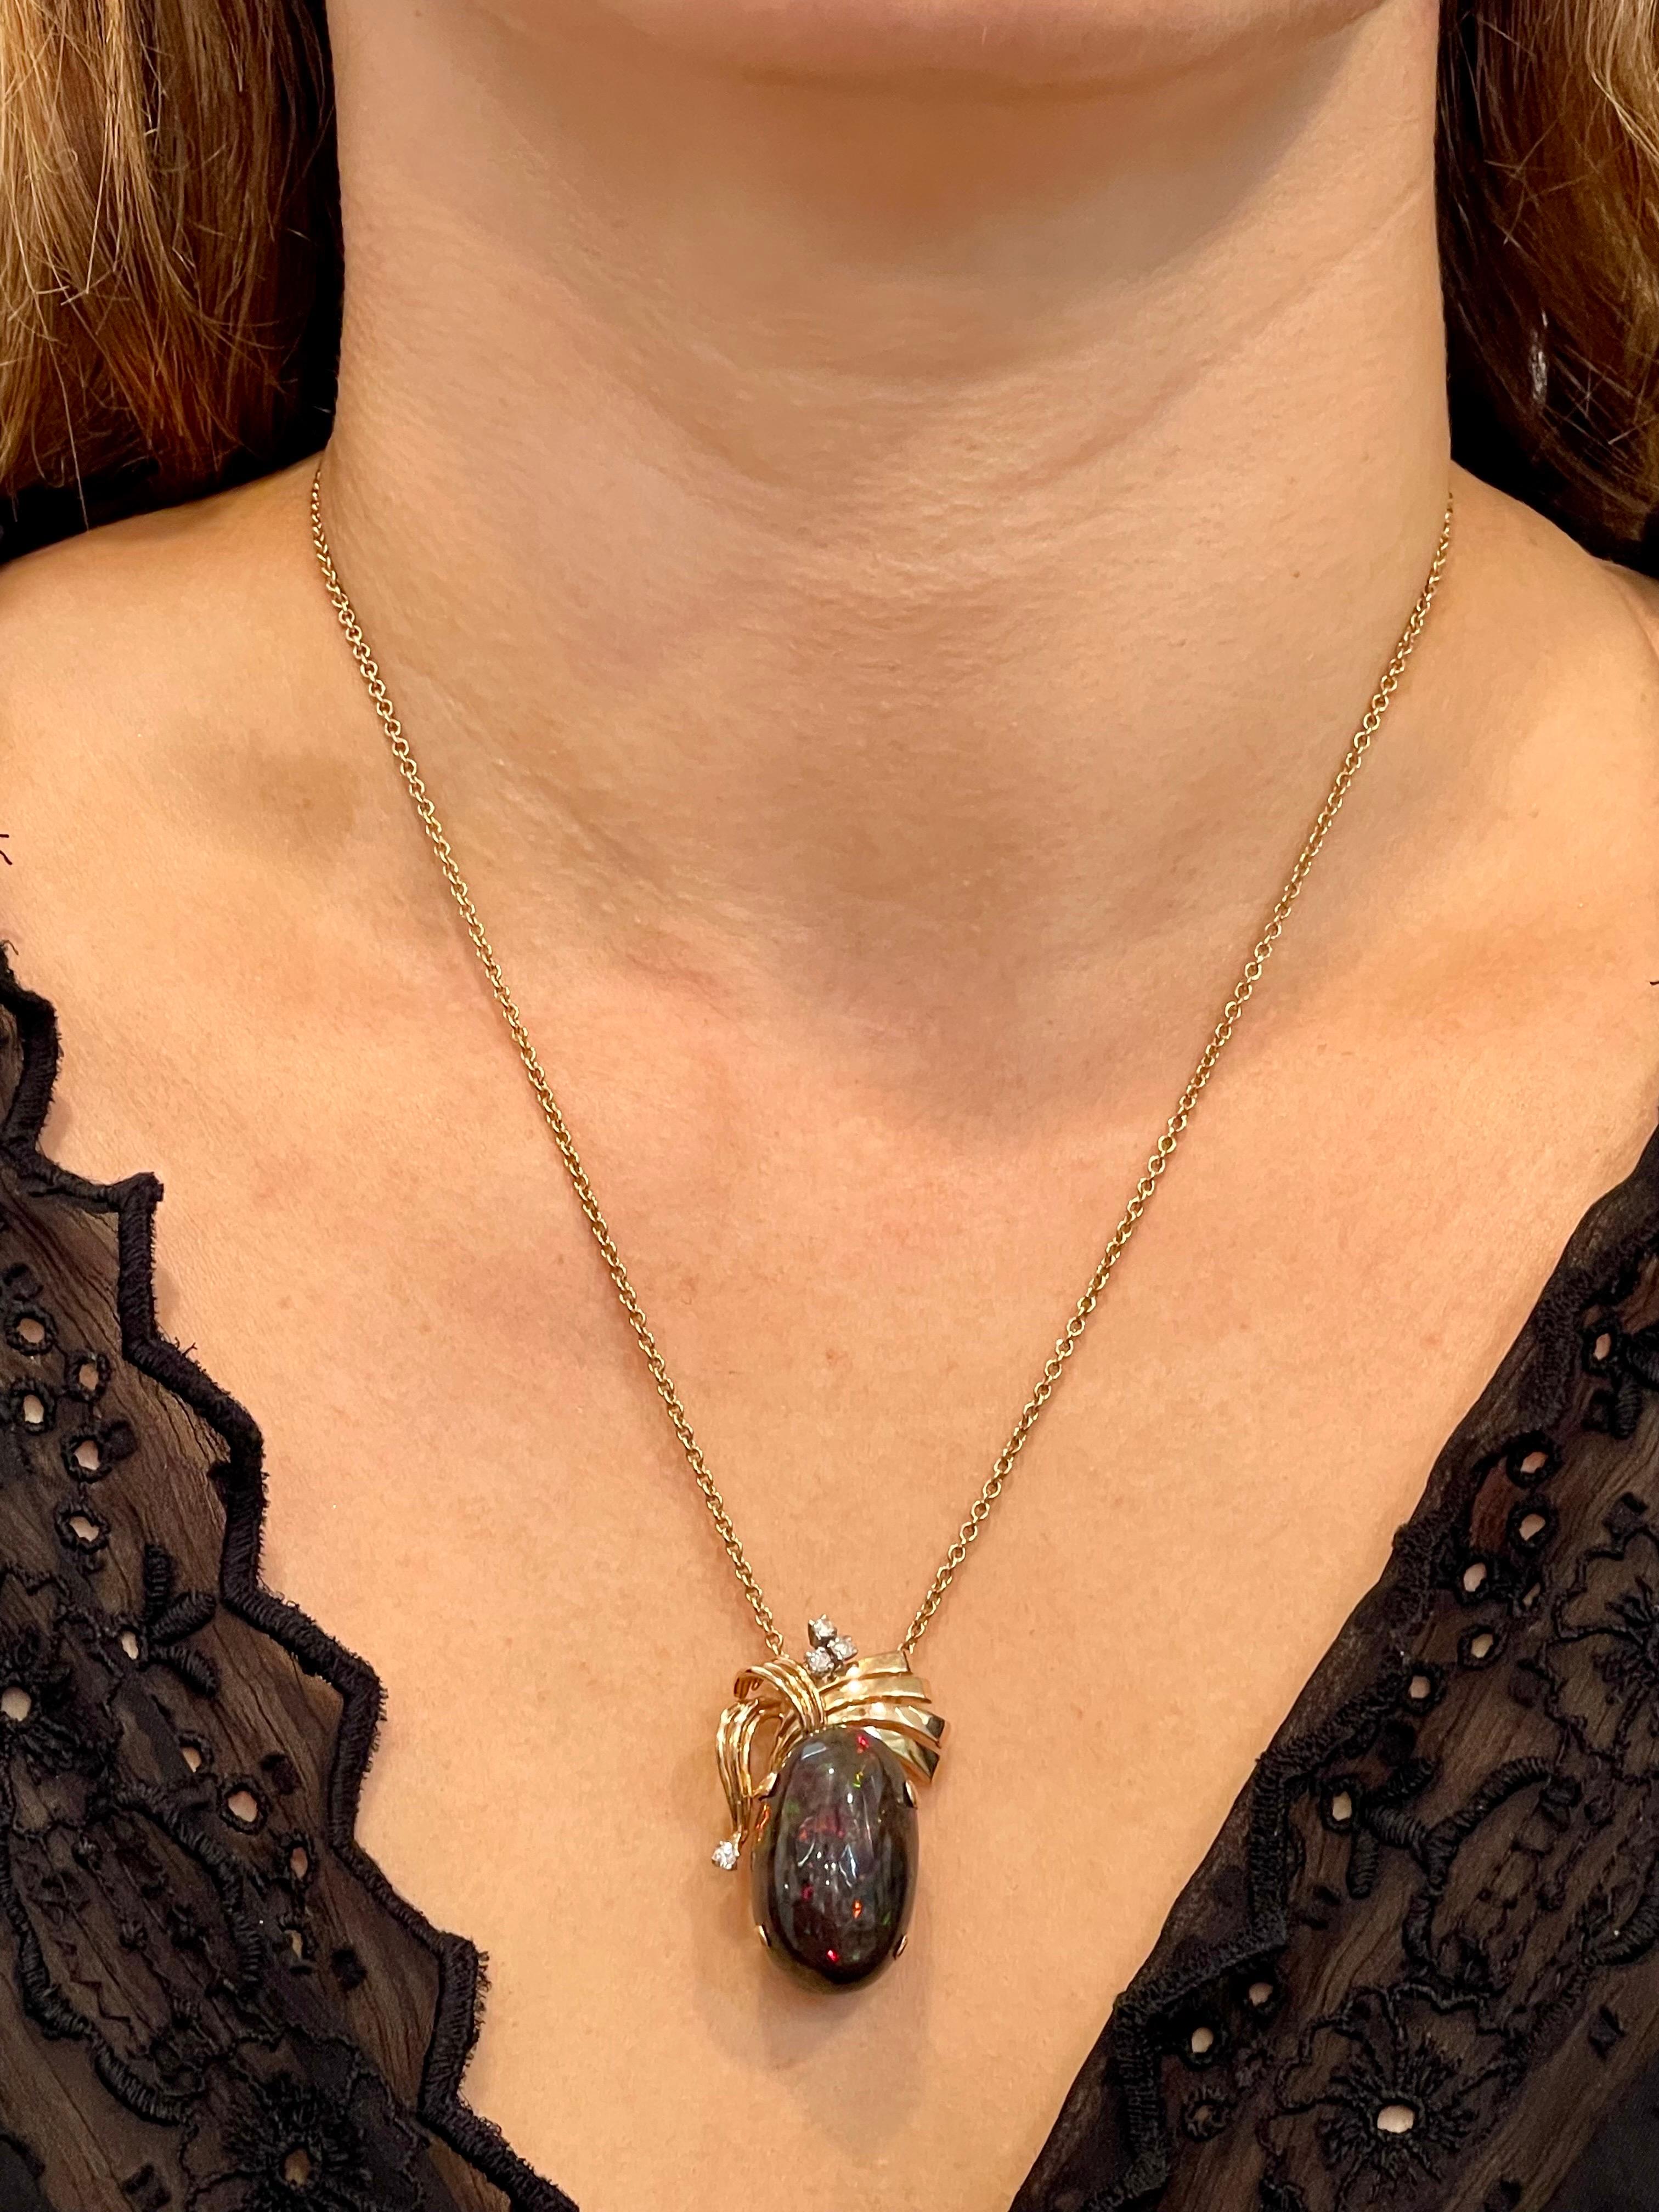 30 Carat Oval Ethiopian Black Opal Pendant/Necklace 18 Karat + 18 Kt Gold Chain 12